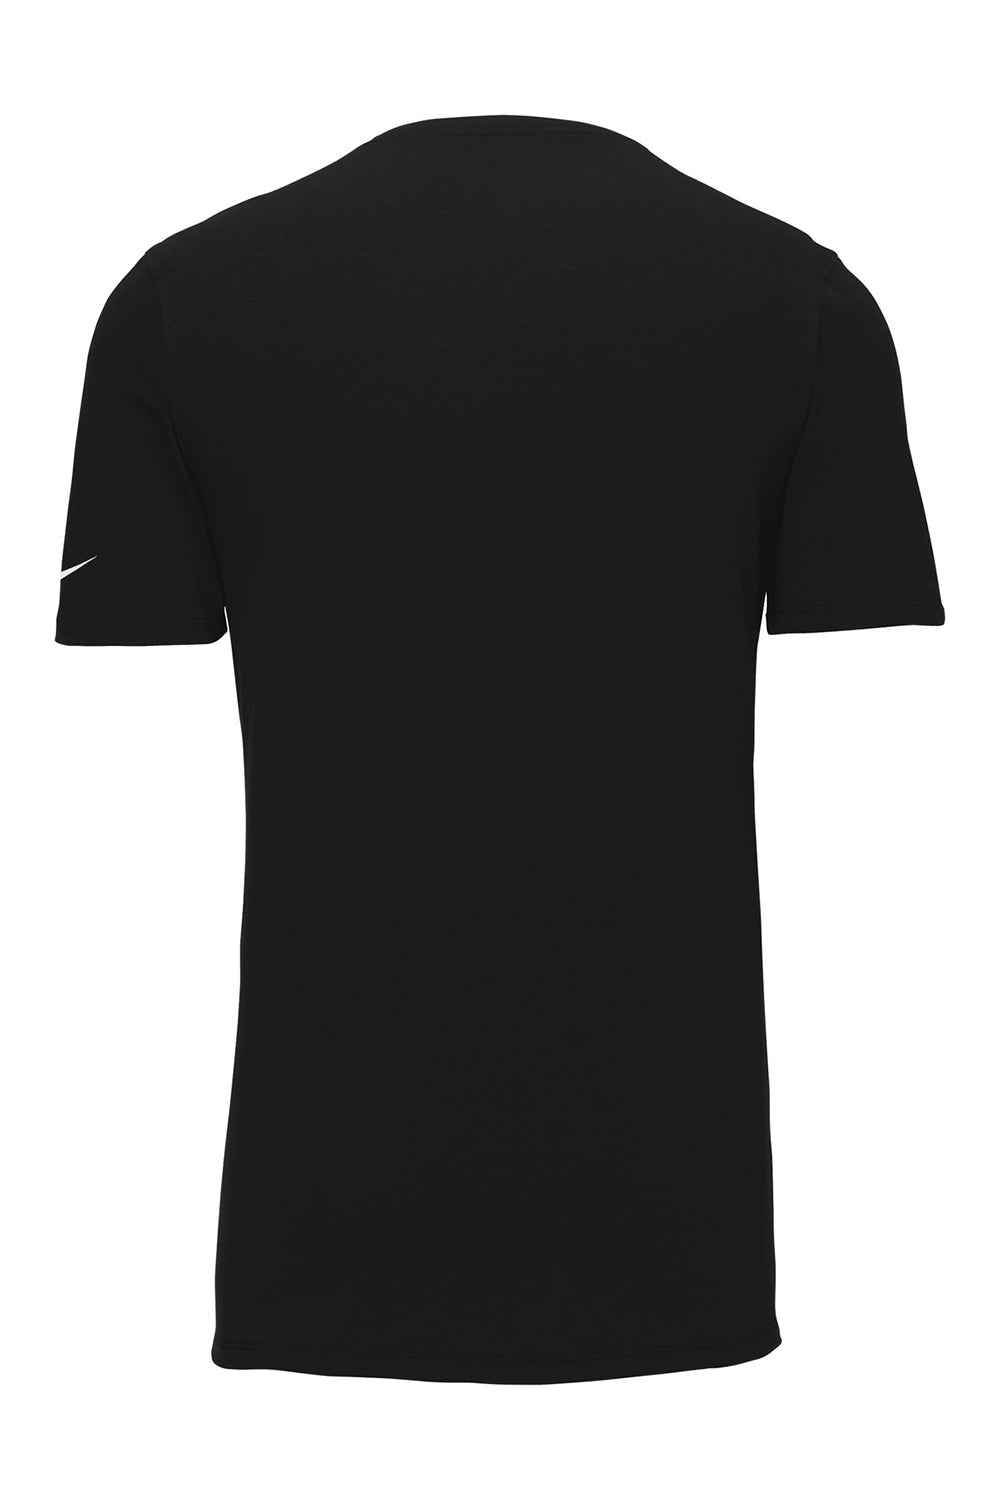 Nike NKBQ5231 Mens Dri-Fit Moisture Wicking Short Sleeve Crewneck T-Shirt Black Flat Back